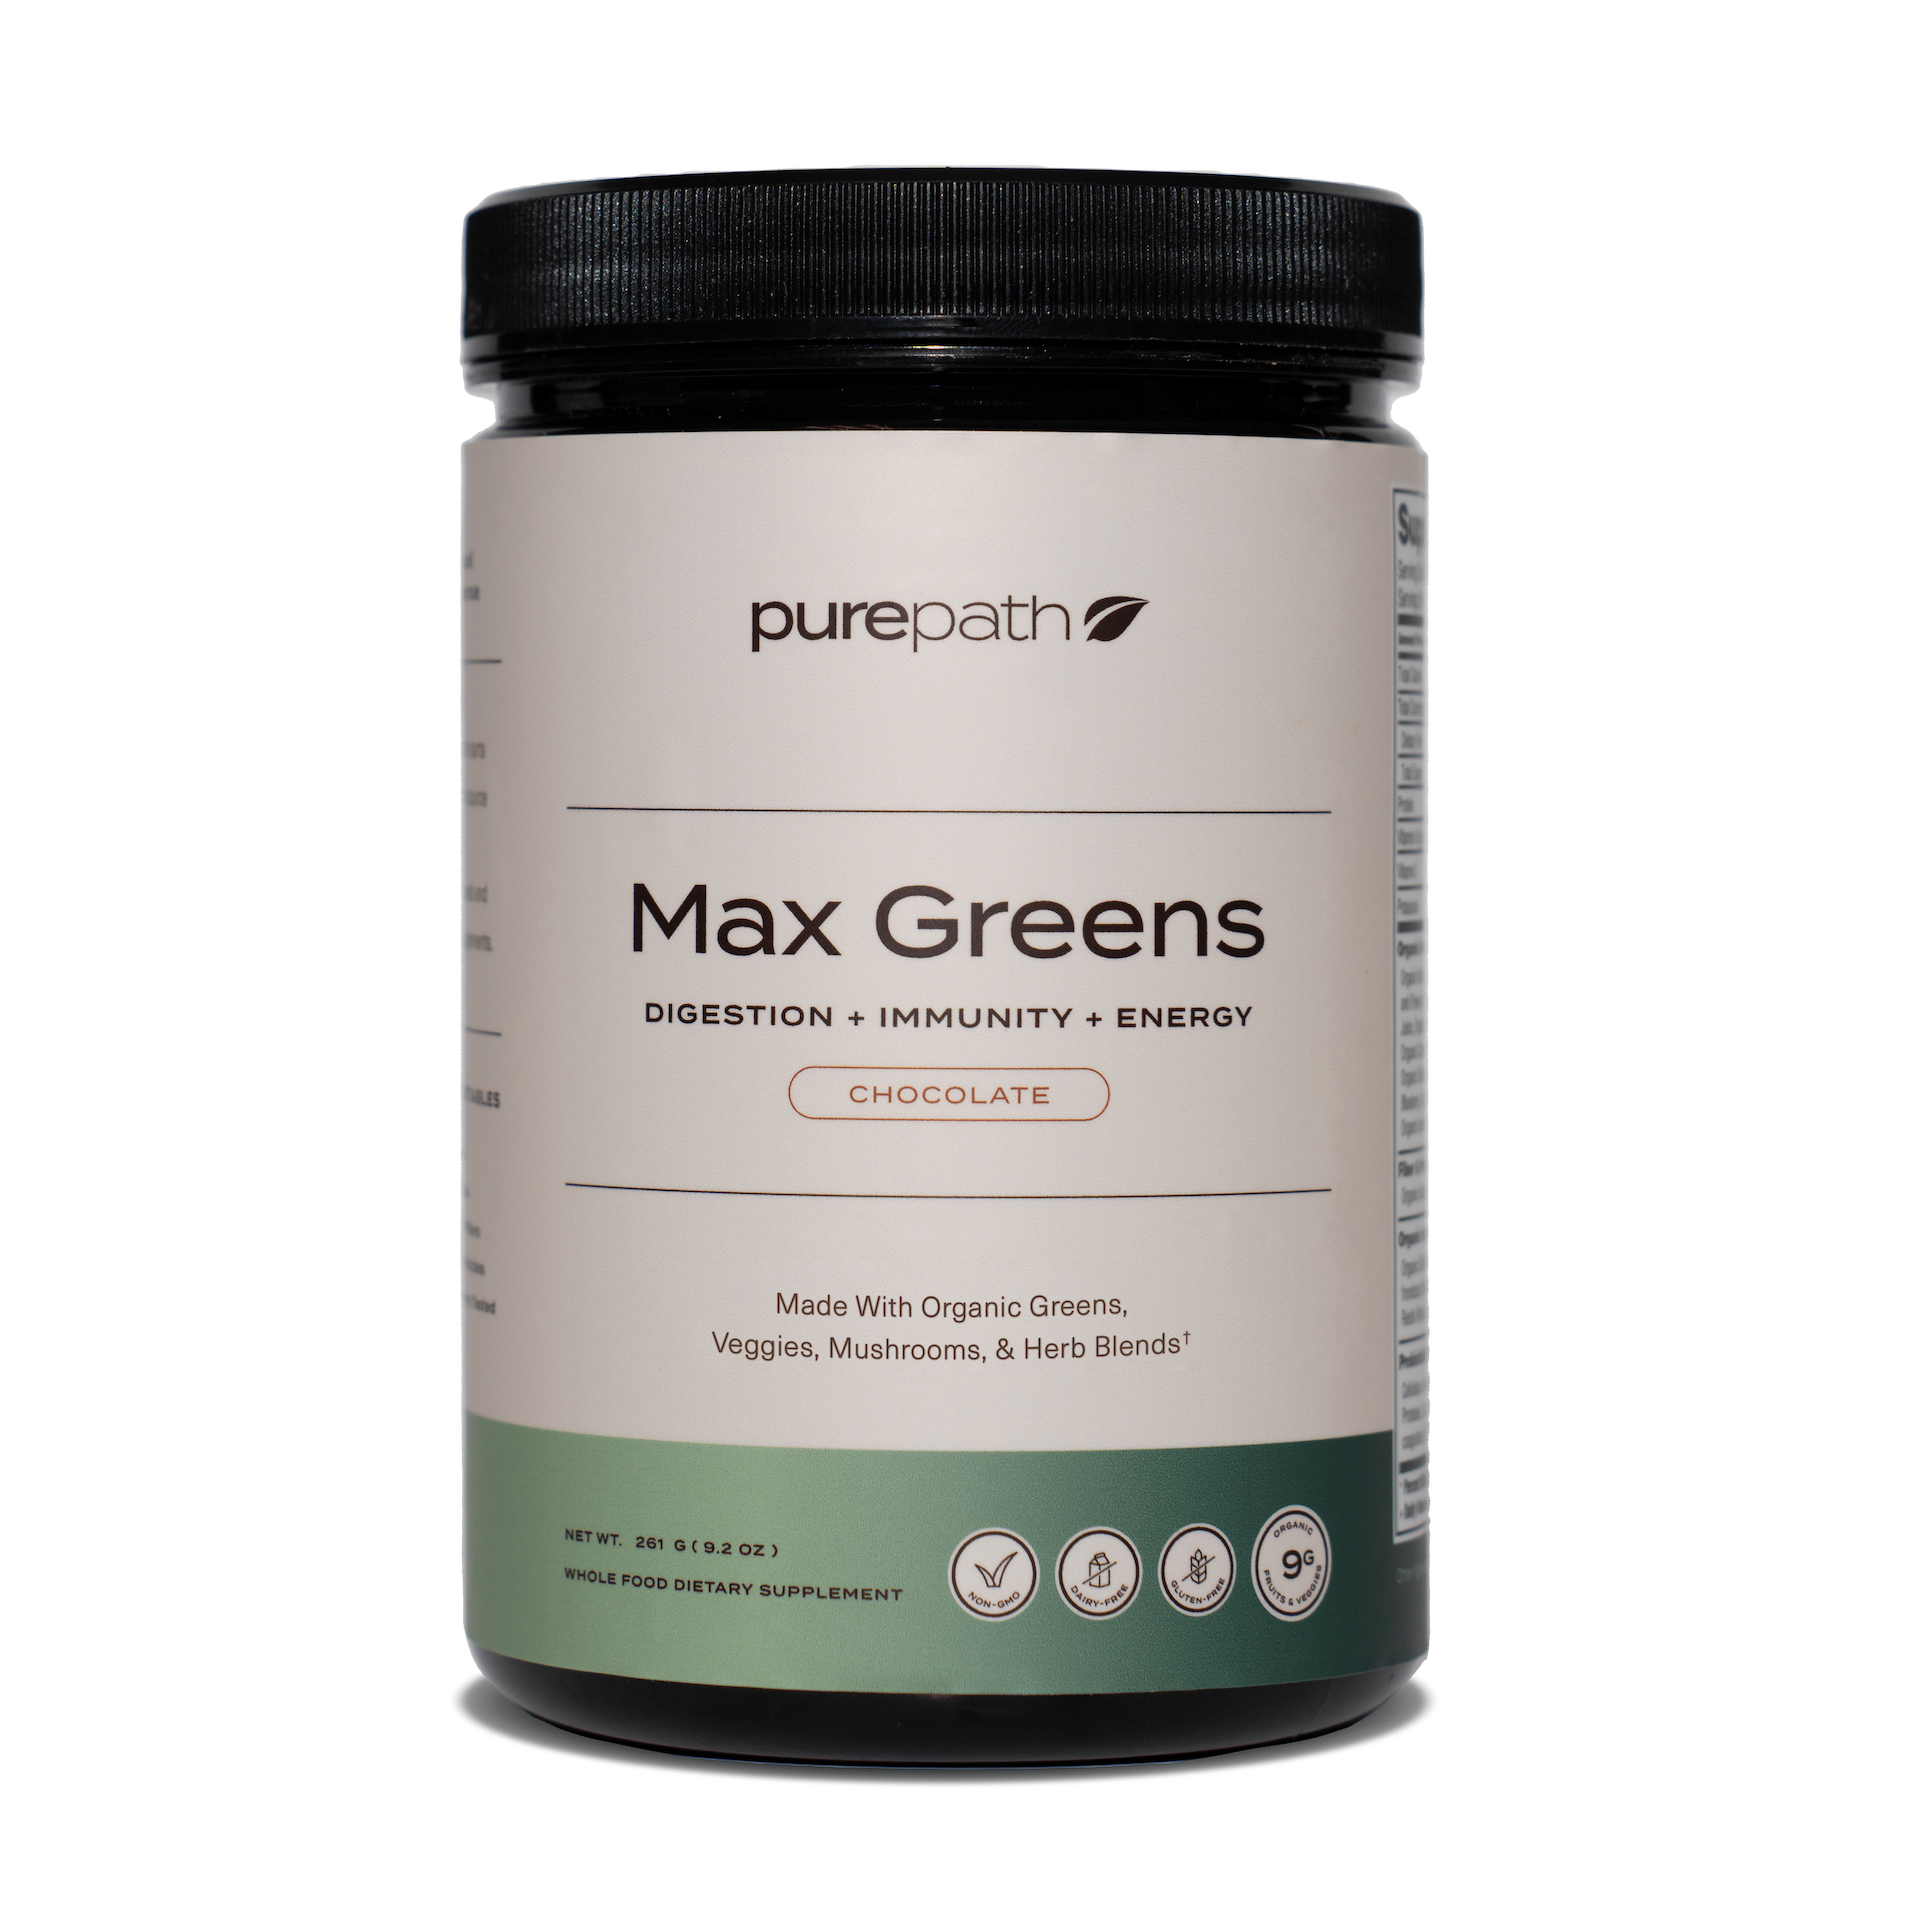 PurePath Max Greens